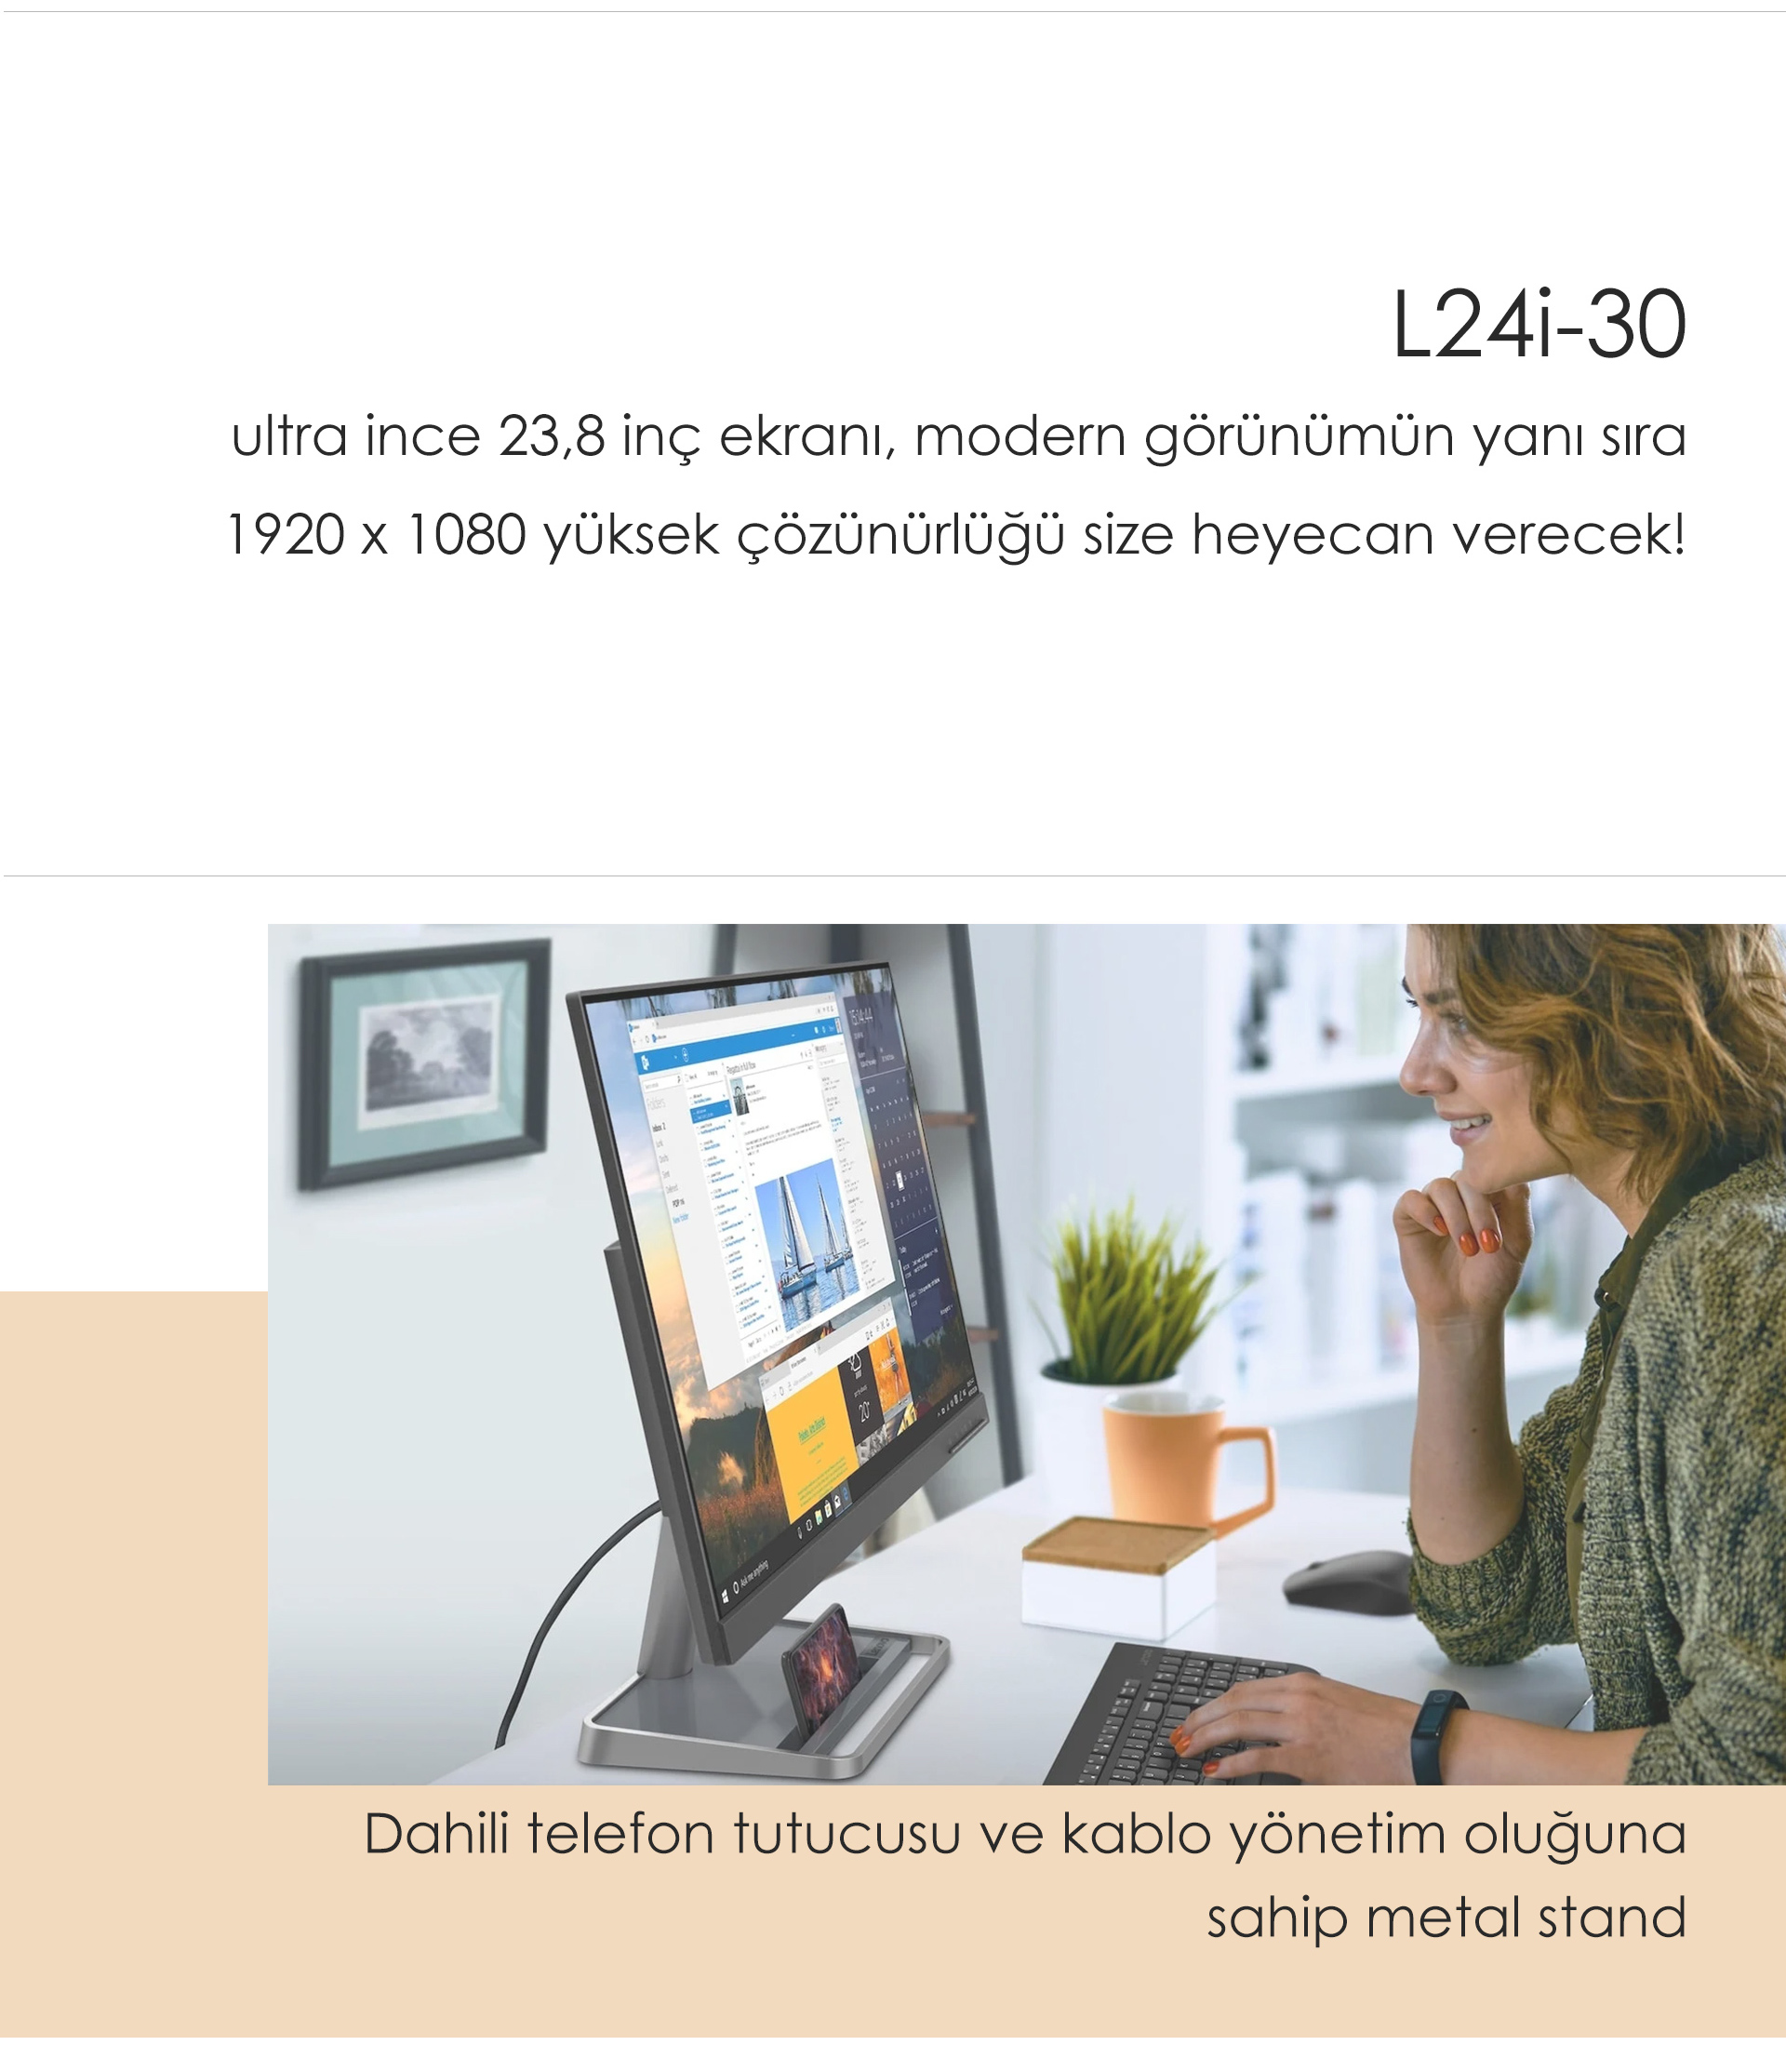 Lenovo L24i-30 66BDKAC2TK monitor telefon tutucu özellik ultra ince ekran 